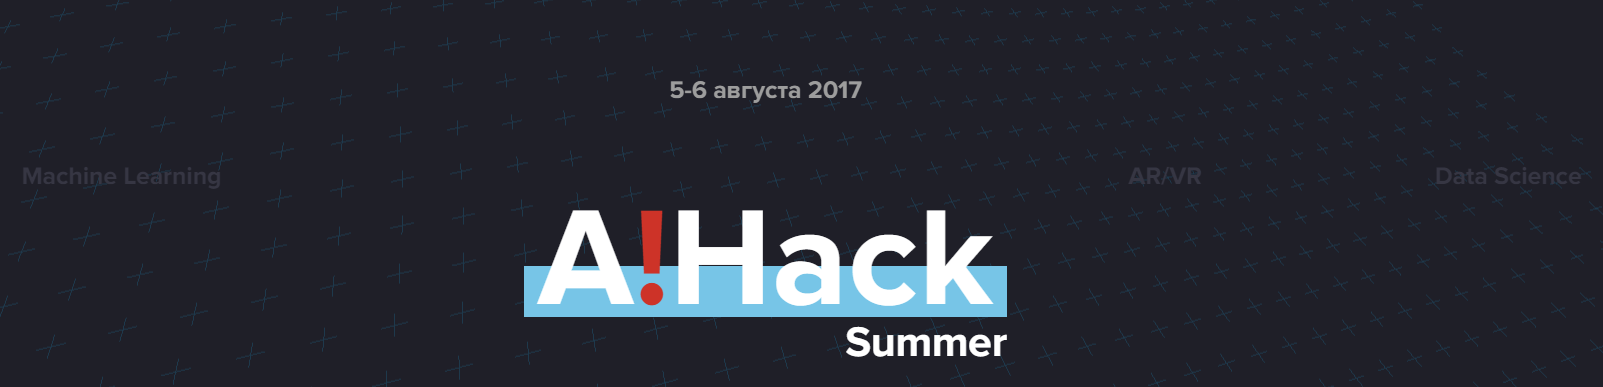 A!Hack Summer — хакатон Альфа-Банка 5 и 6 августа 2017 - 1